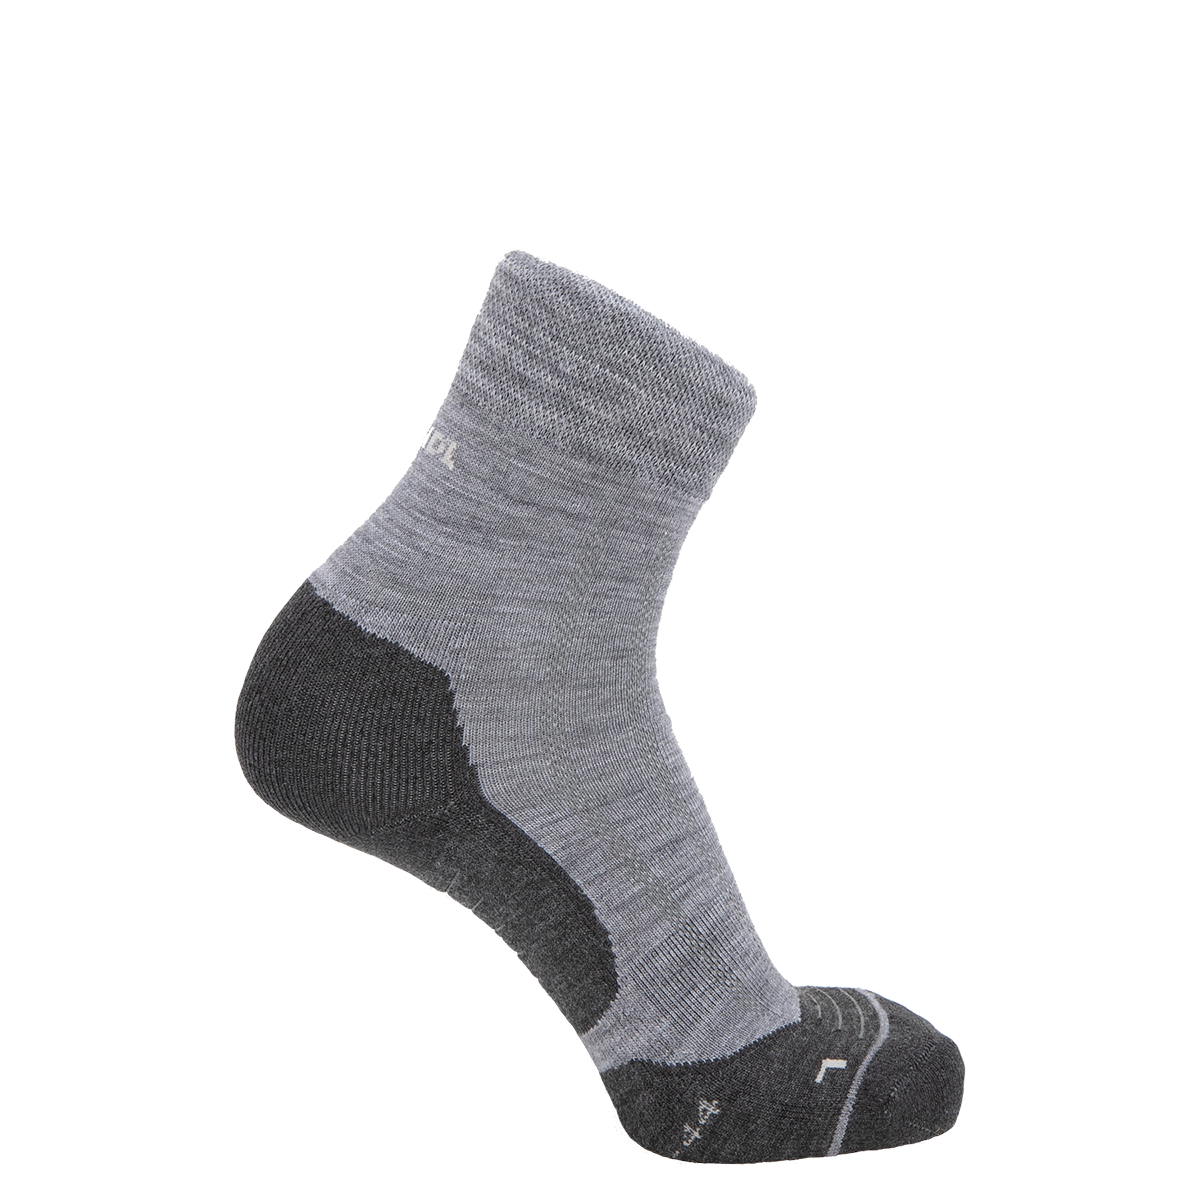 Meindl MT3 Lightweight Merino Wool Hiking Socks - Meindl USA